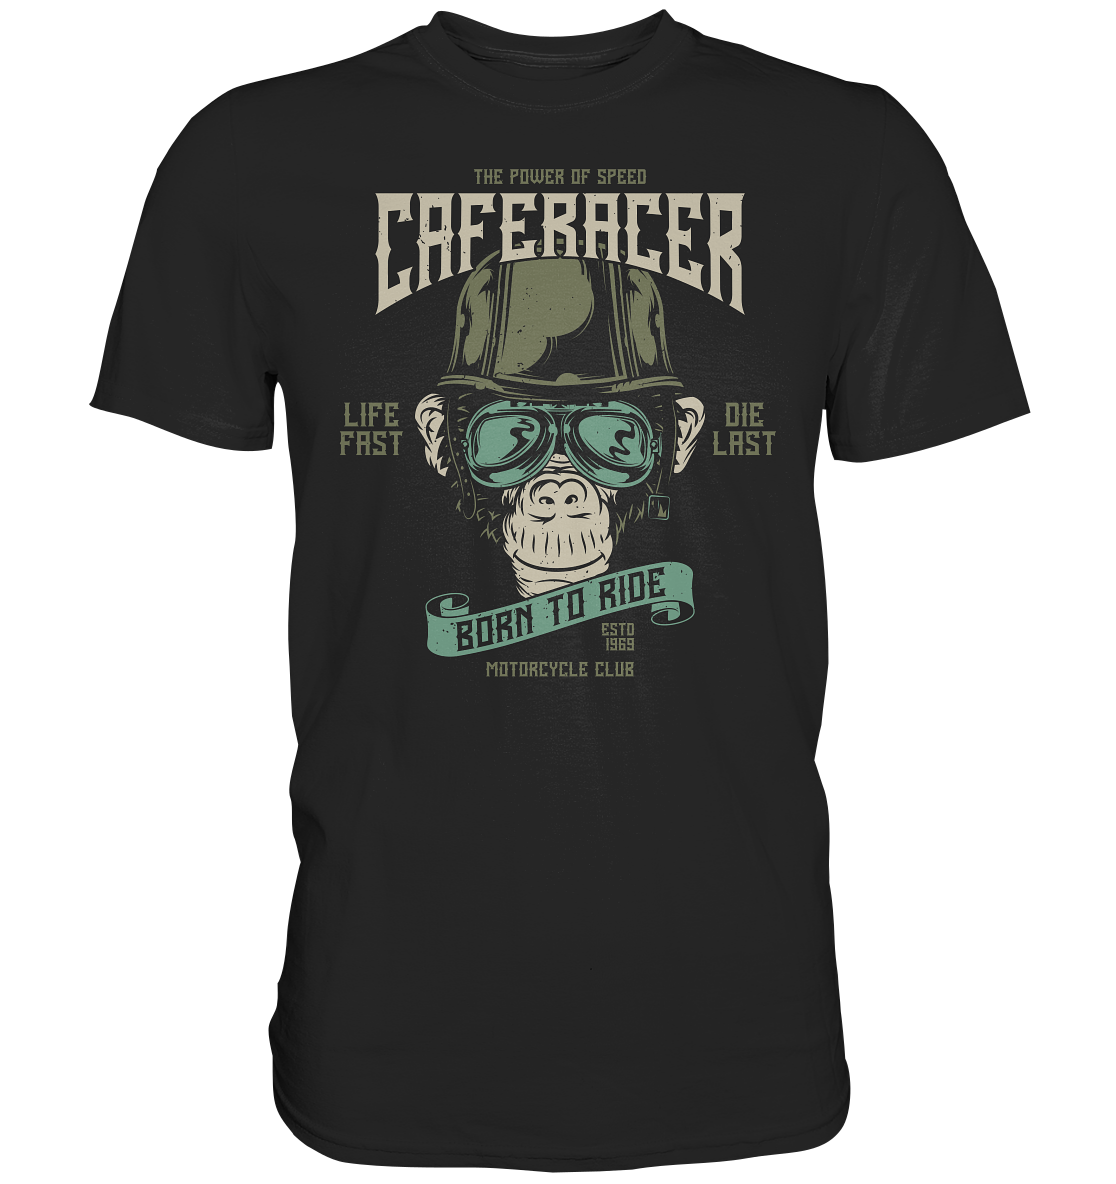 Affenkopf "Born to ride caferacer" - Premium unisex Shirt